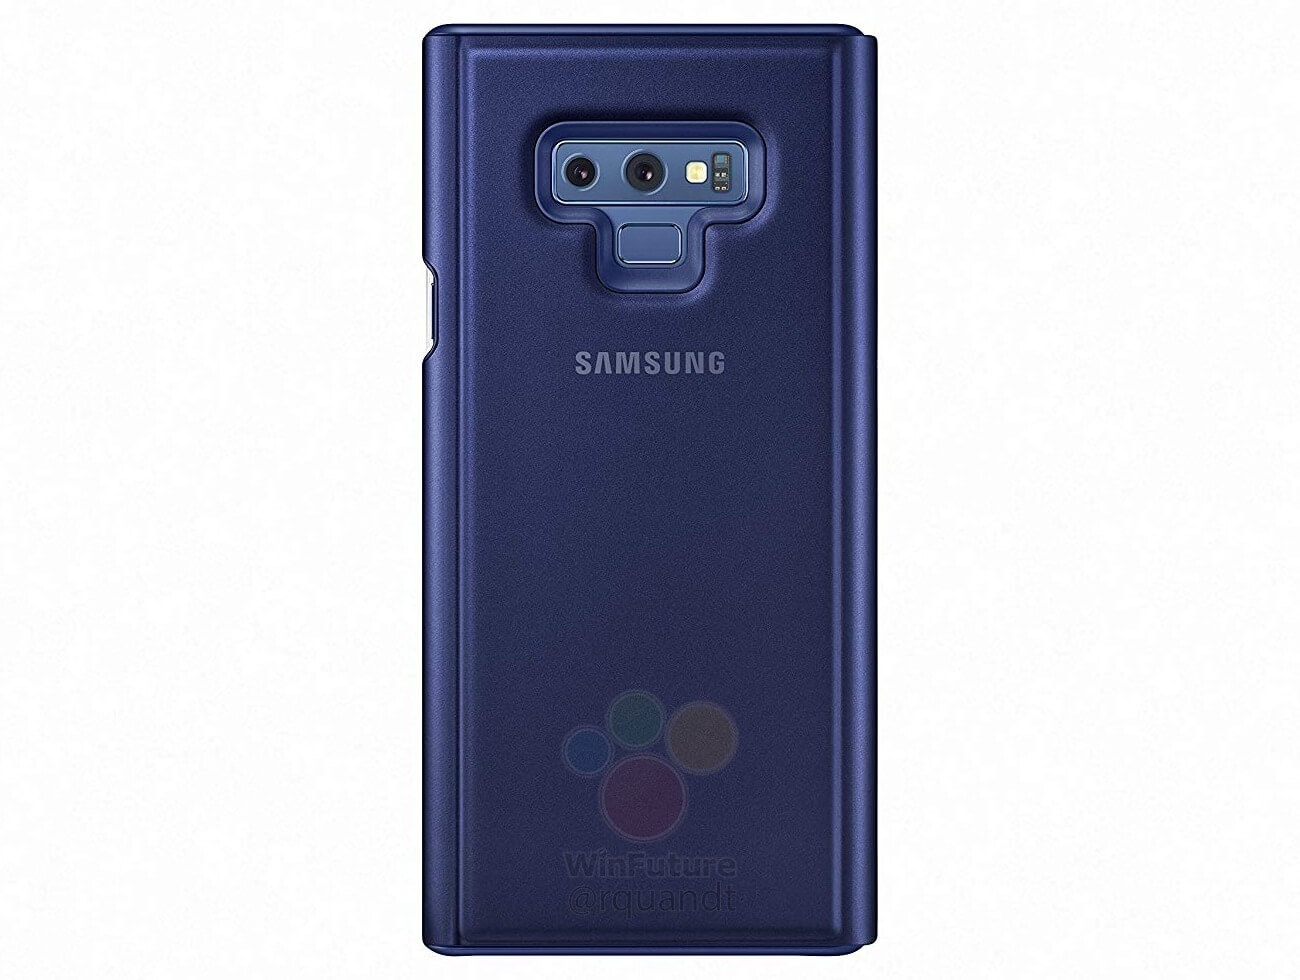 Samsung-Galaxy-Note9-Zubehoer-1532635676-0-0.jpg